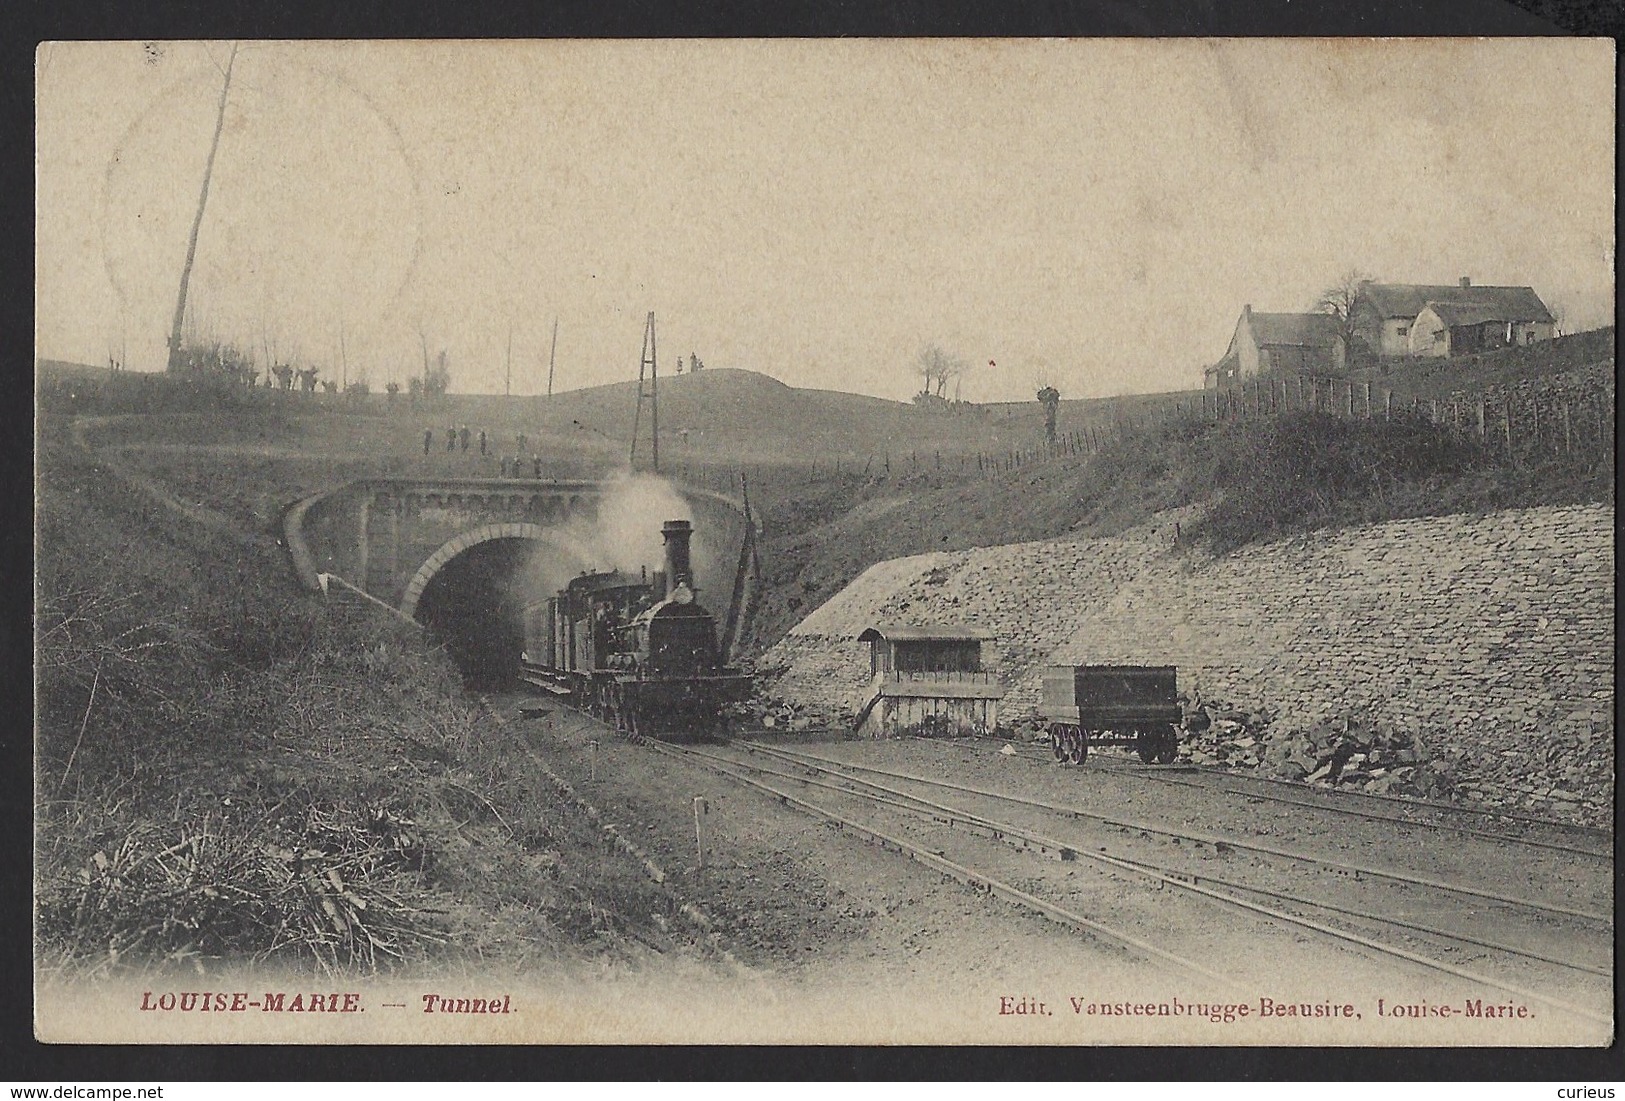 RONSE * MAARKEDAL * TUNNEL LOUISE-MARIE * TREIN * TRAIN * EDIT. VANSTEENBRUGGE-BEAUSIRE * 1913 - Trains